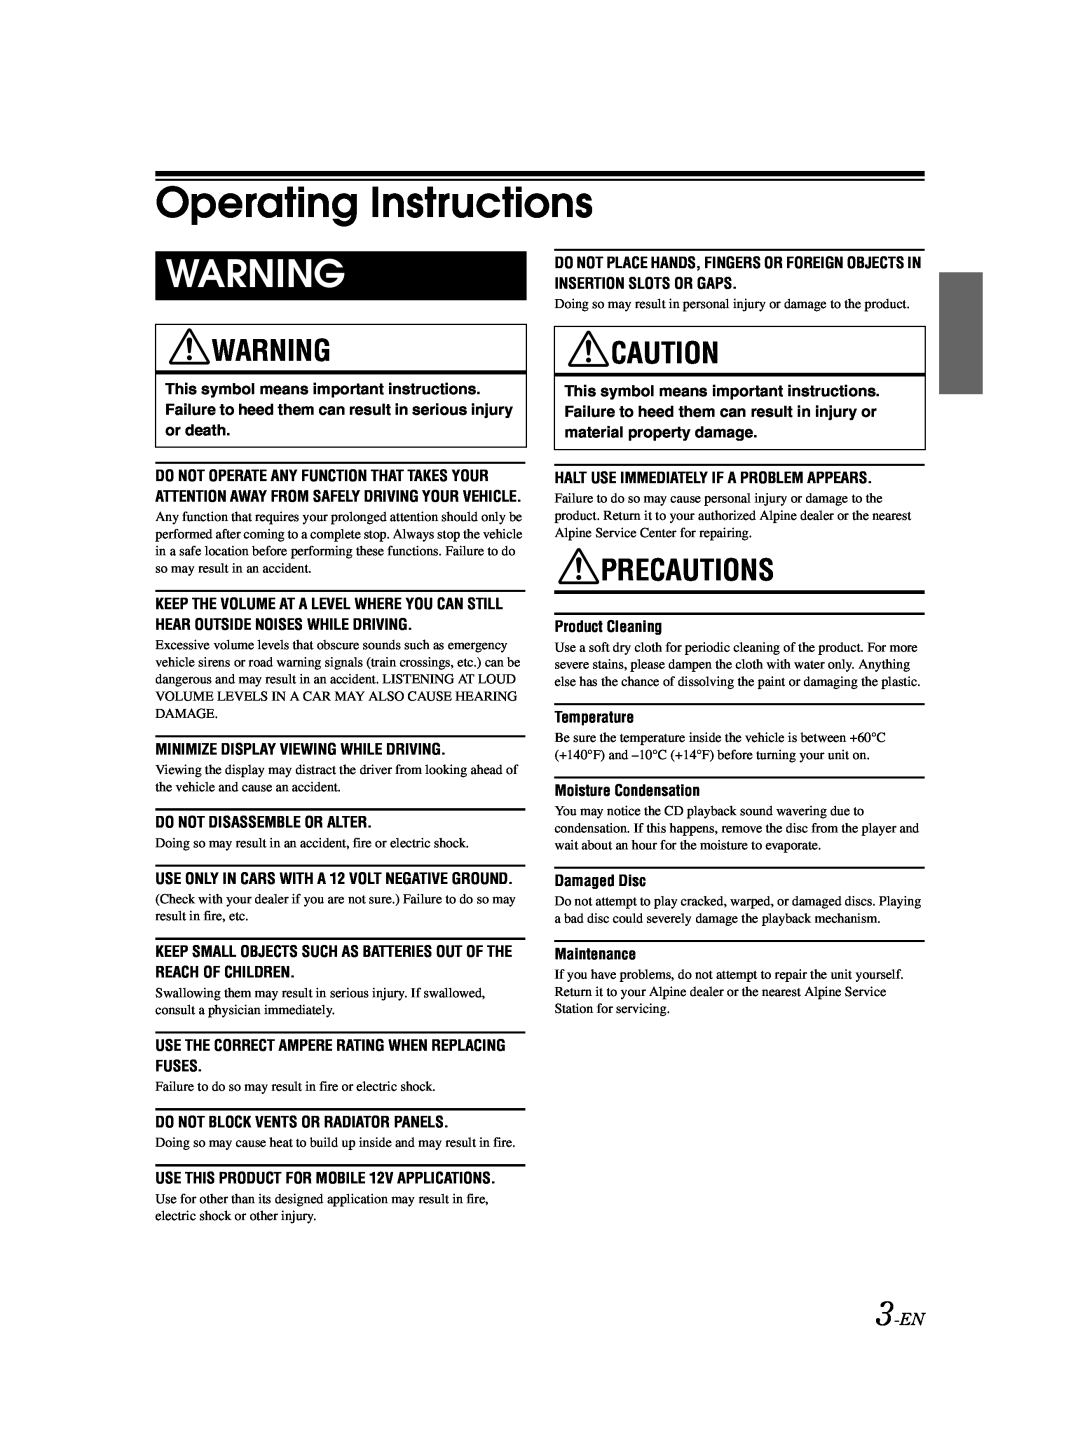 Alpine CDE-9873 owner manual Operating Instructions, Precautions, 3-EN 